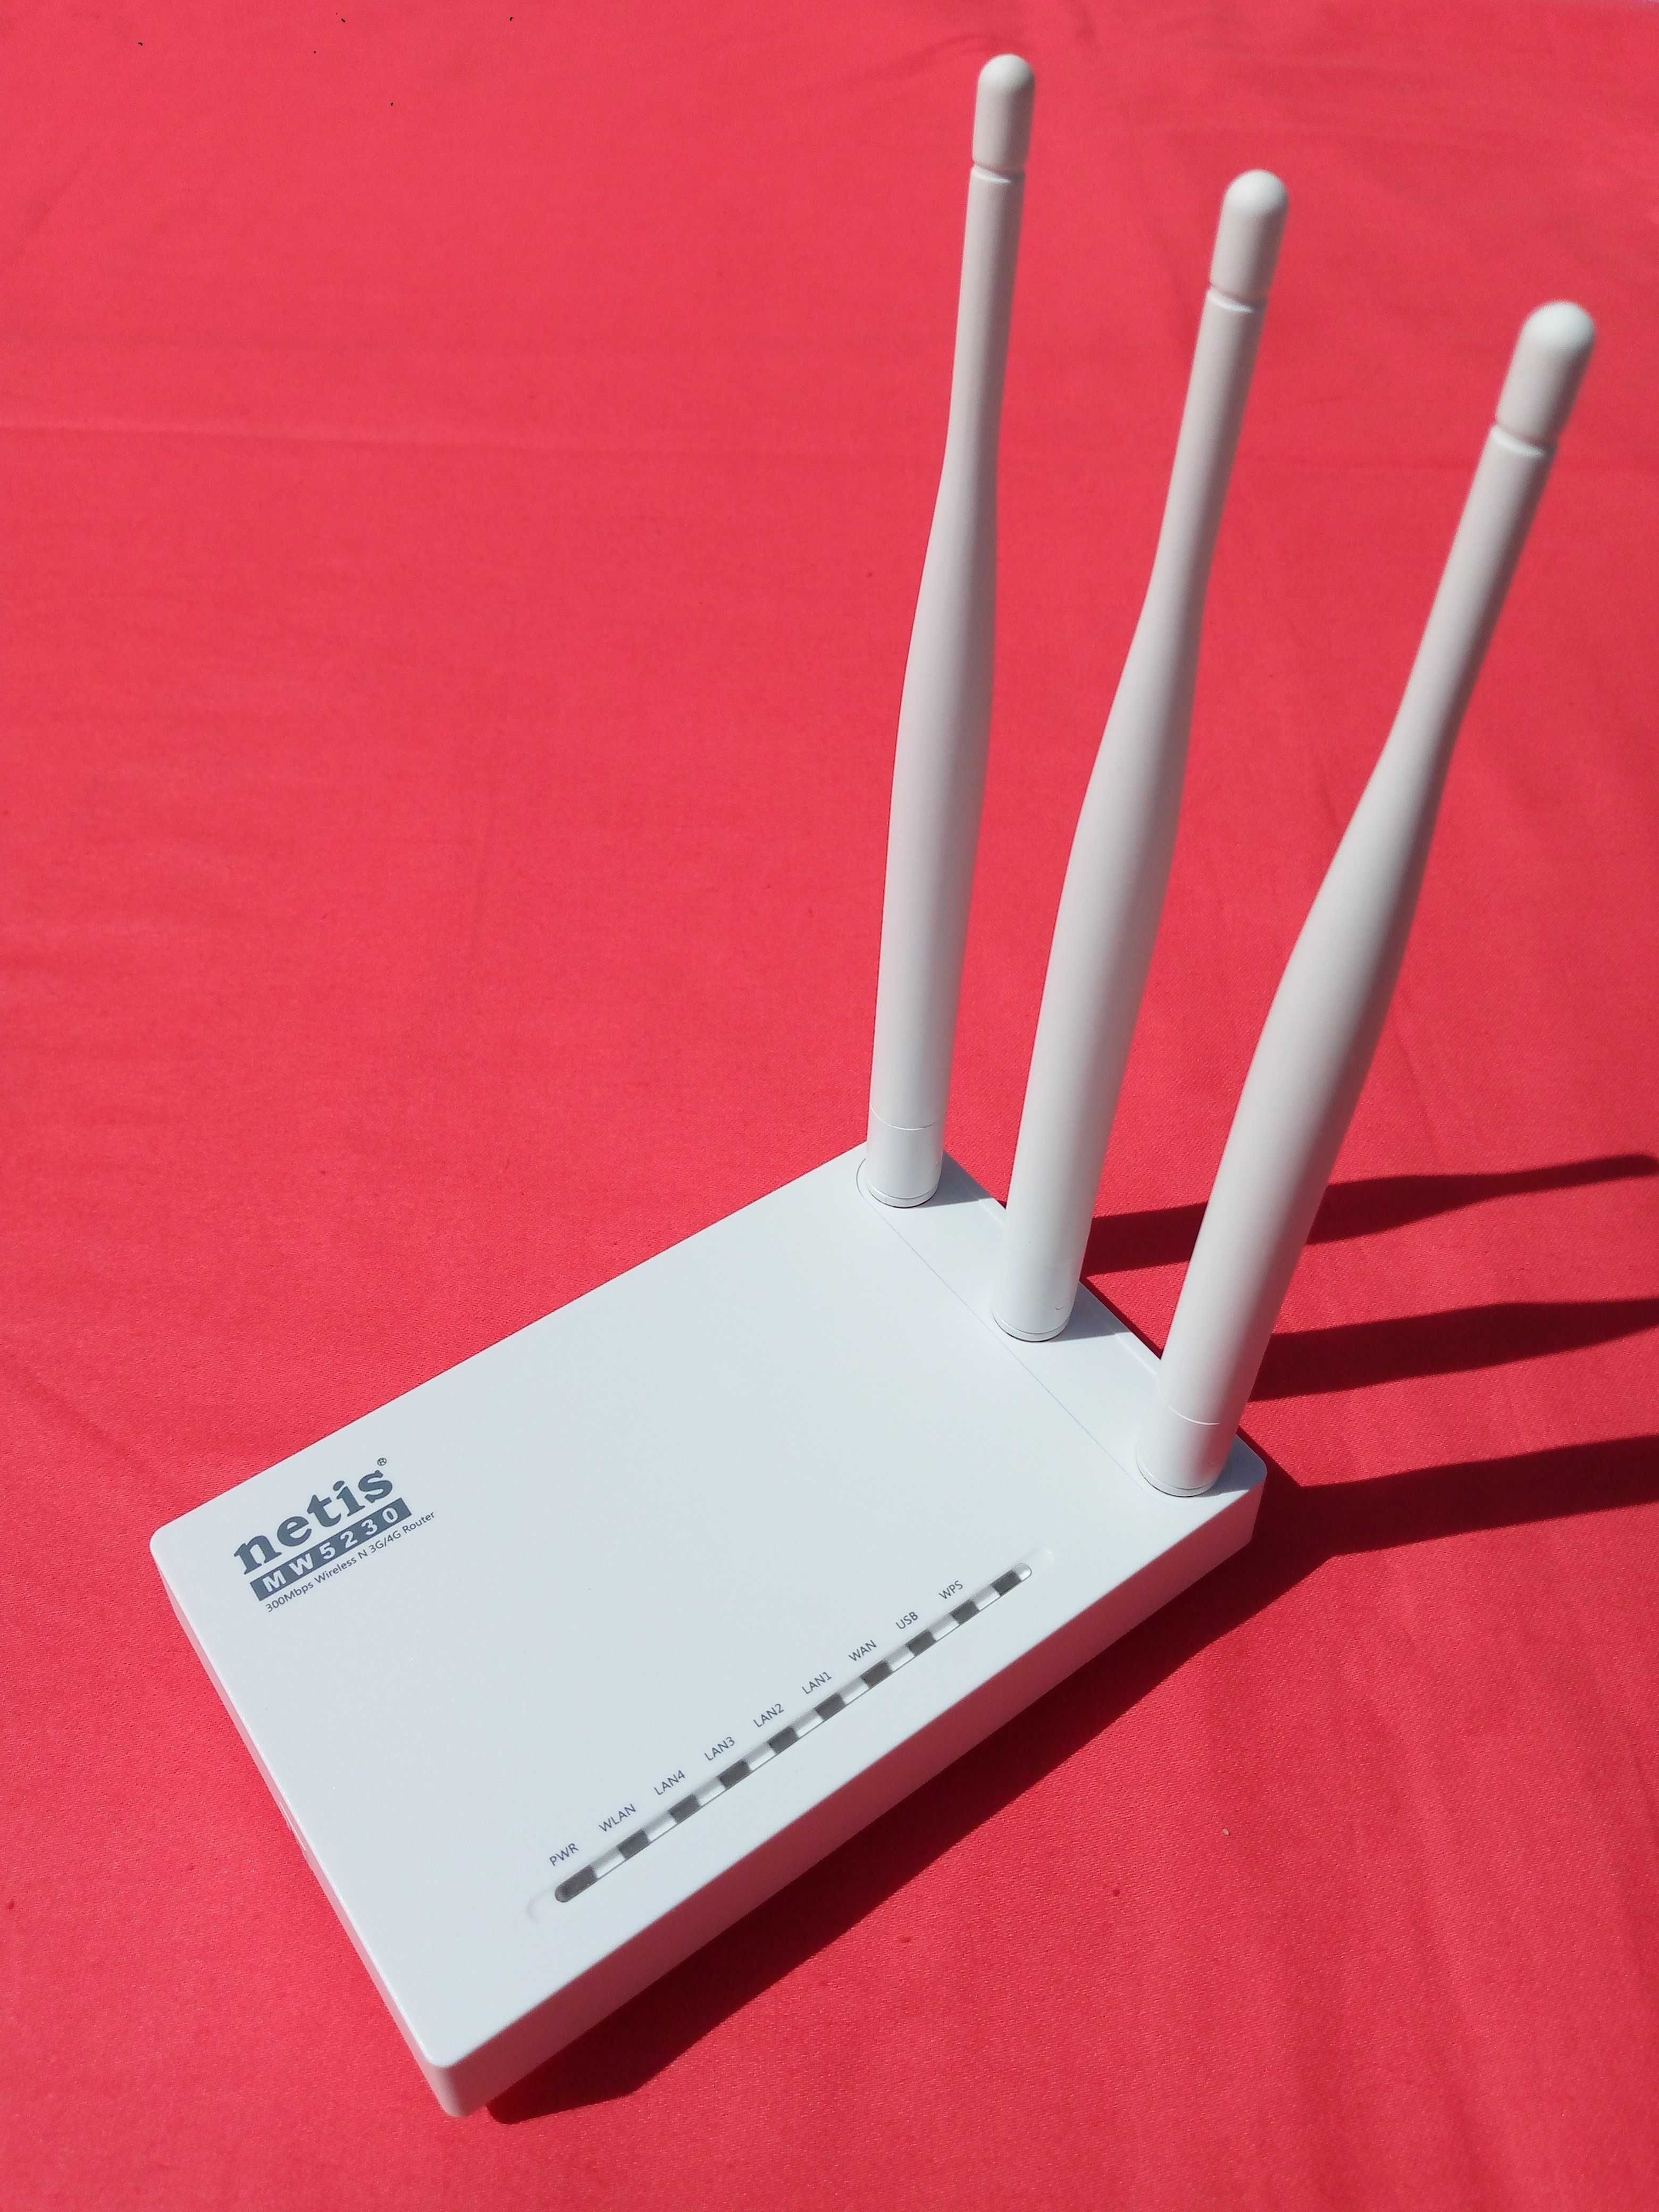 ‼️ Теле2 Алтел билайн izi актив WiFi роутер 4G+ до 150 мб.сек